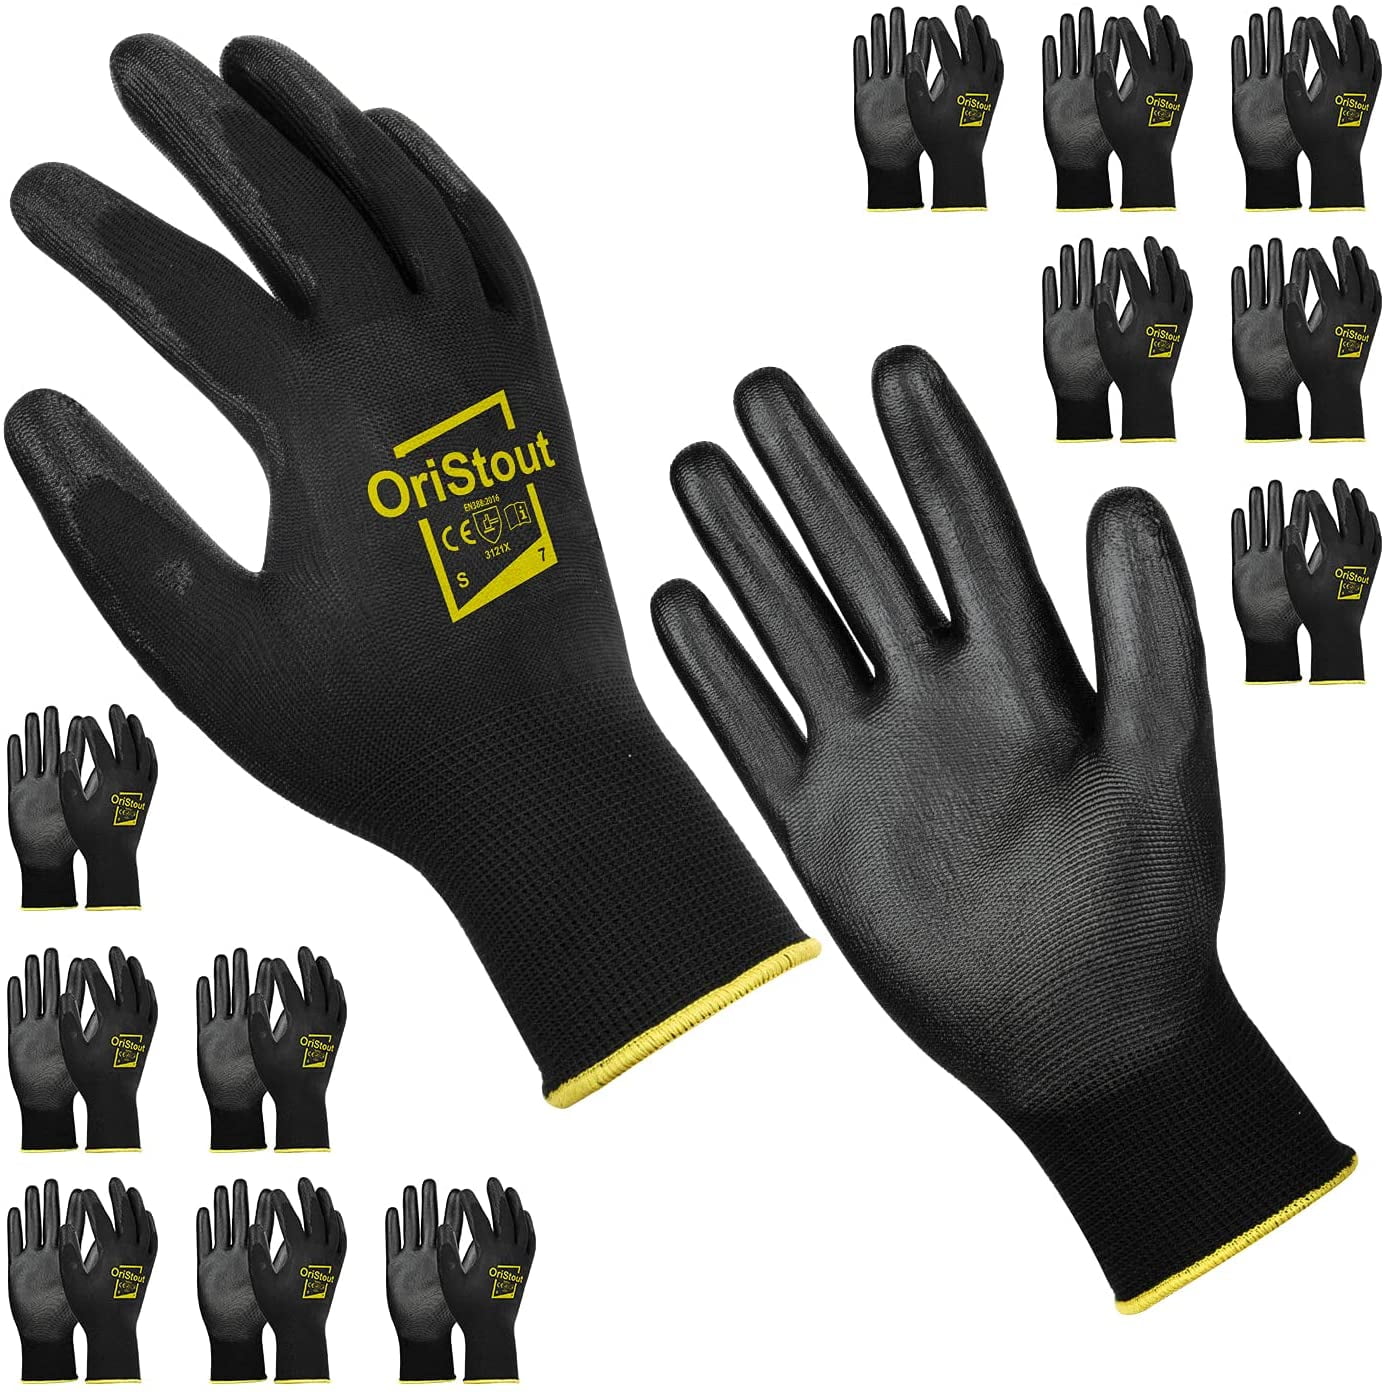 2 Pairs Of Brand New Black Nylon PU Safety Work Gloves Builders Grip Gardening